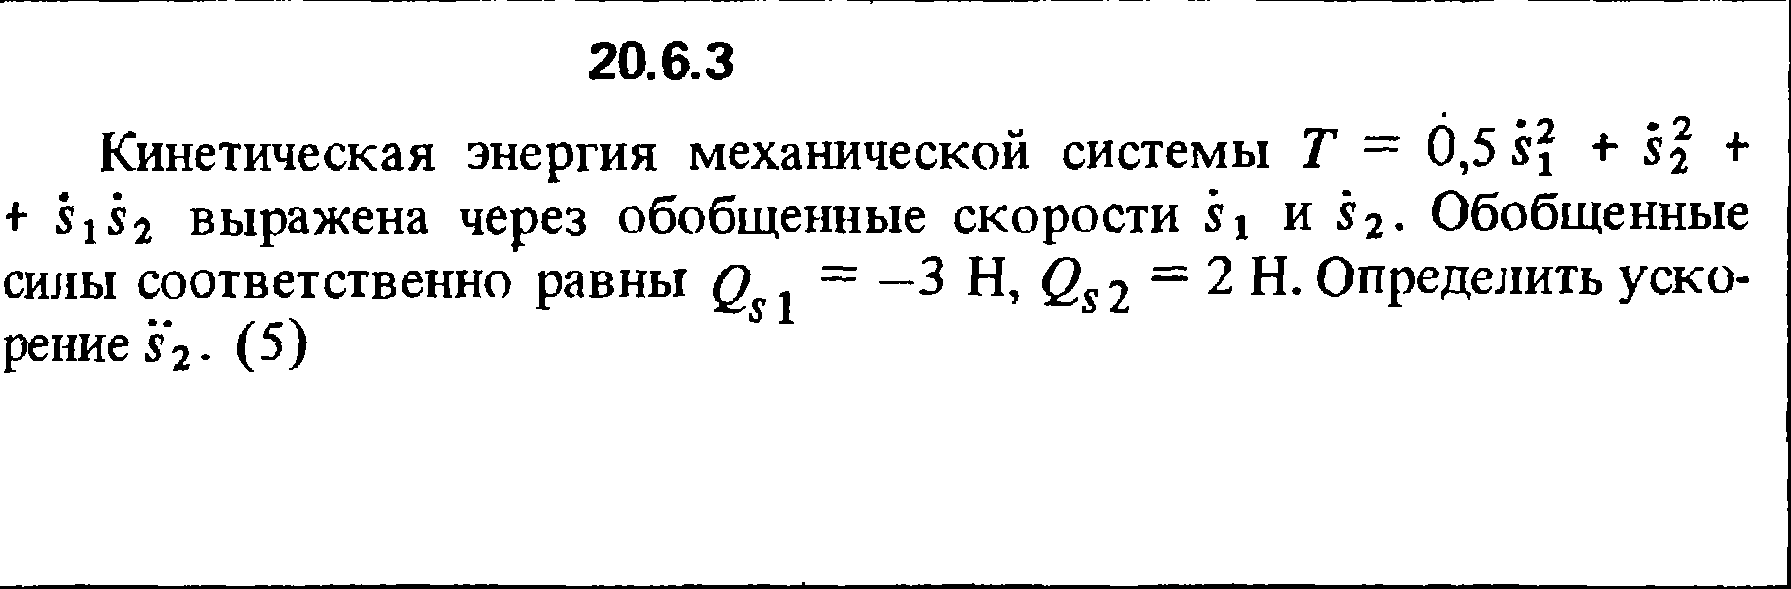 Решение 20.6.3 из сборника (решебника) Кепе О.Е. 1989